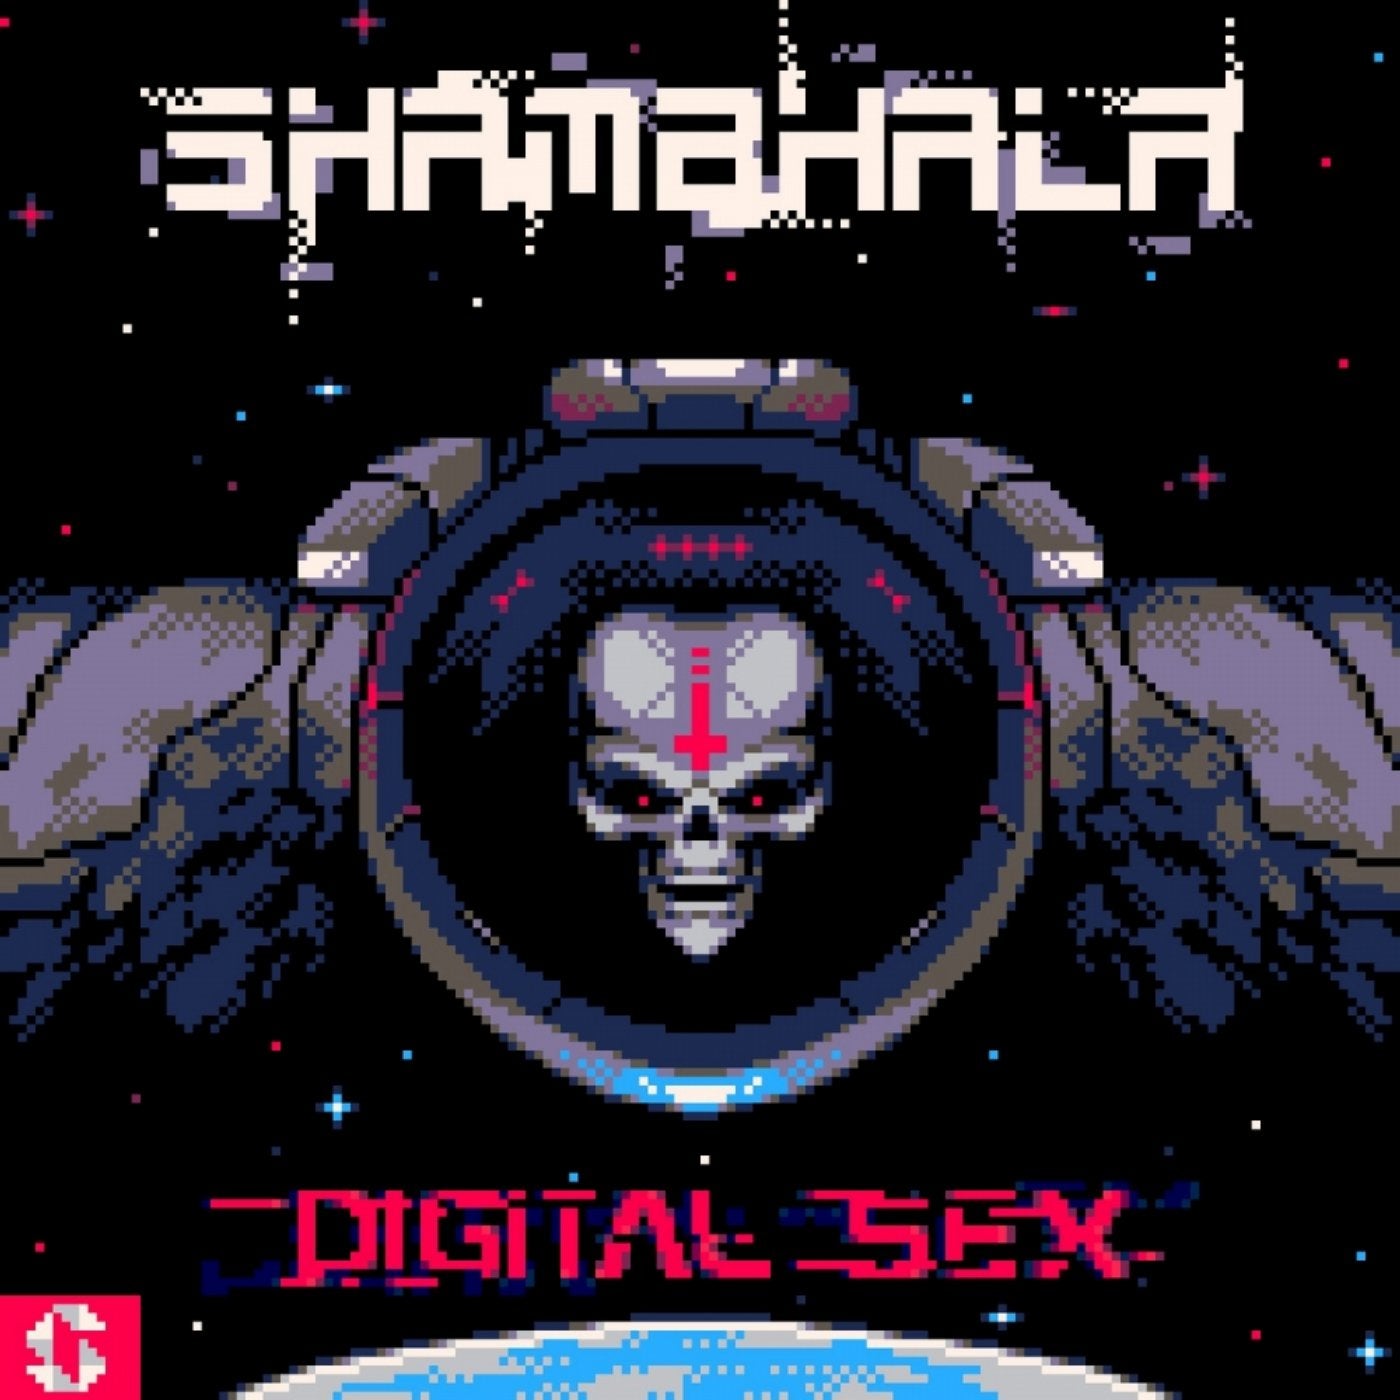 Digital Sex